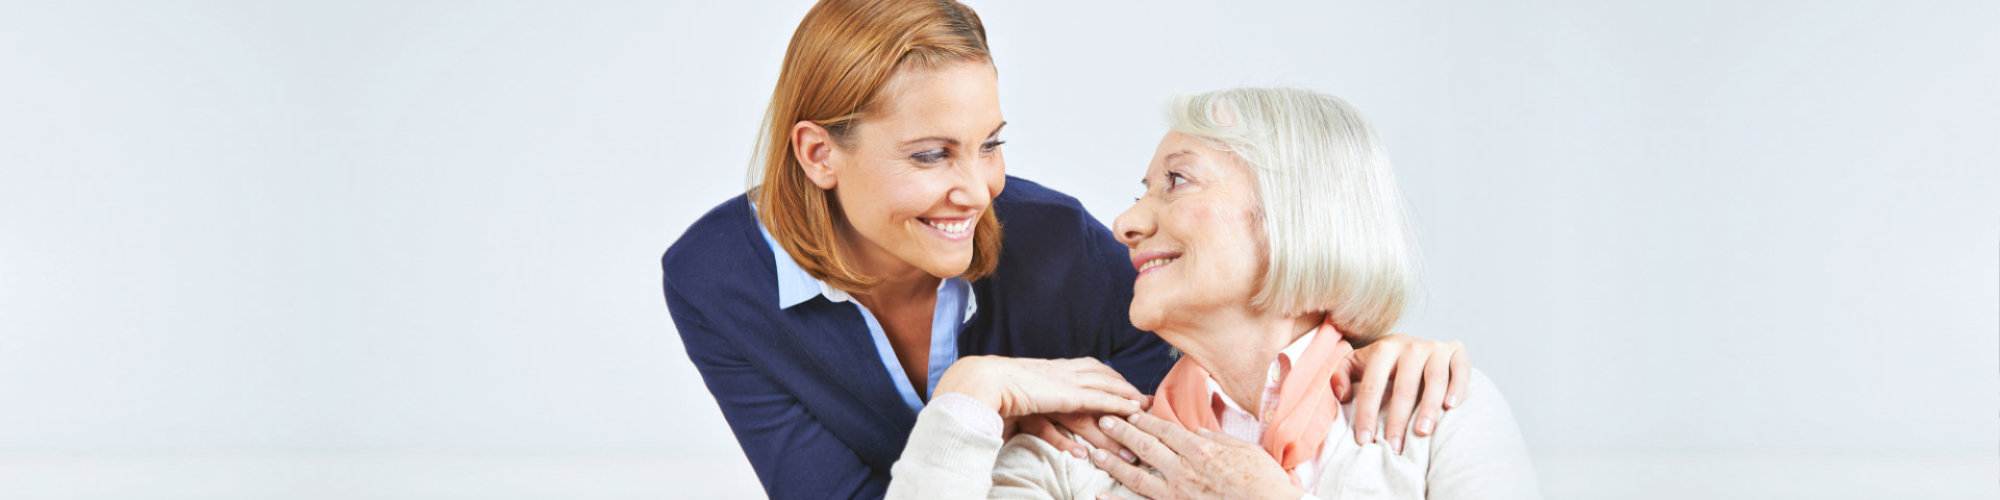 caregiver and senior woman having a conversation